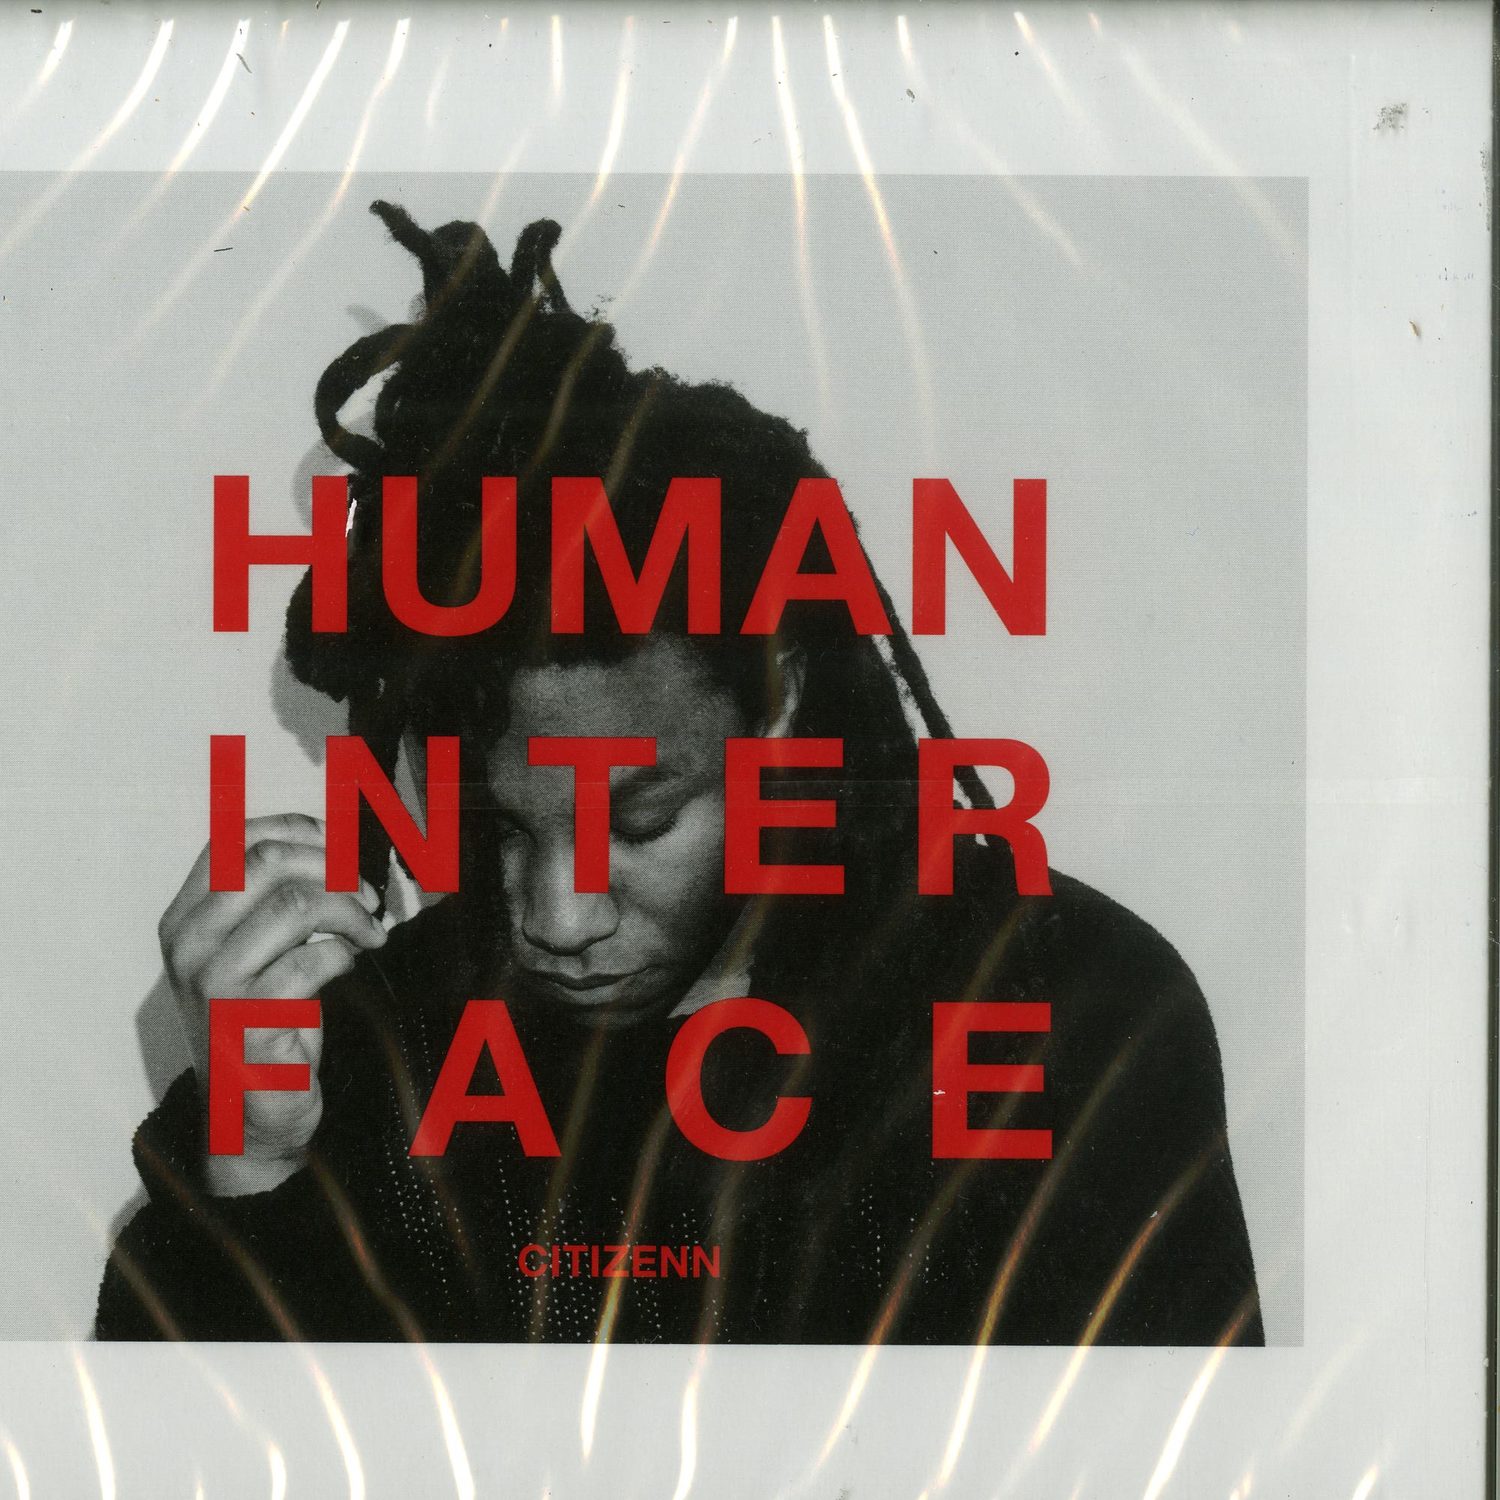 Citizenn - HUMAN INTERFACE 